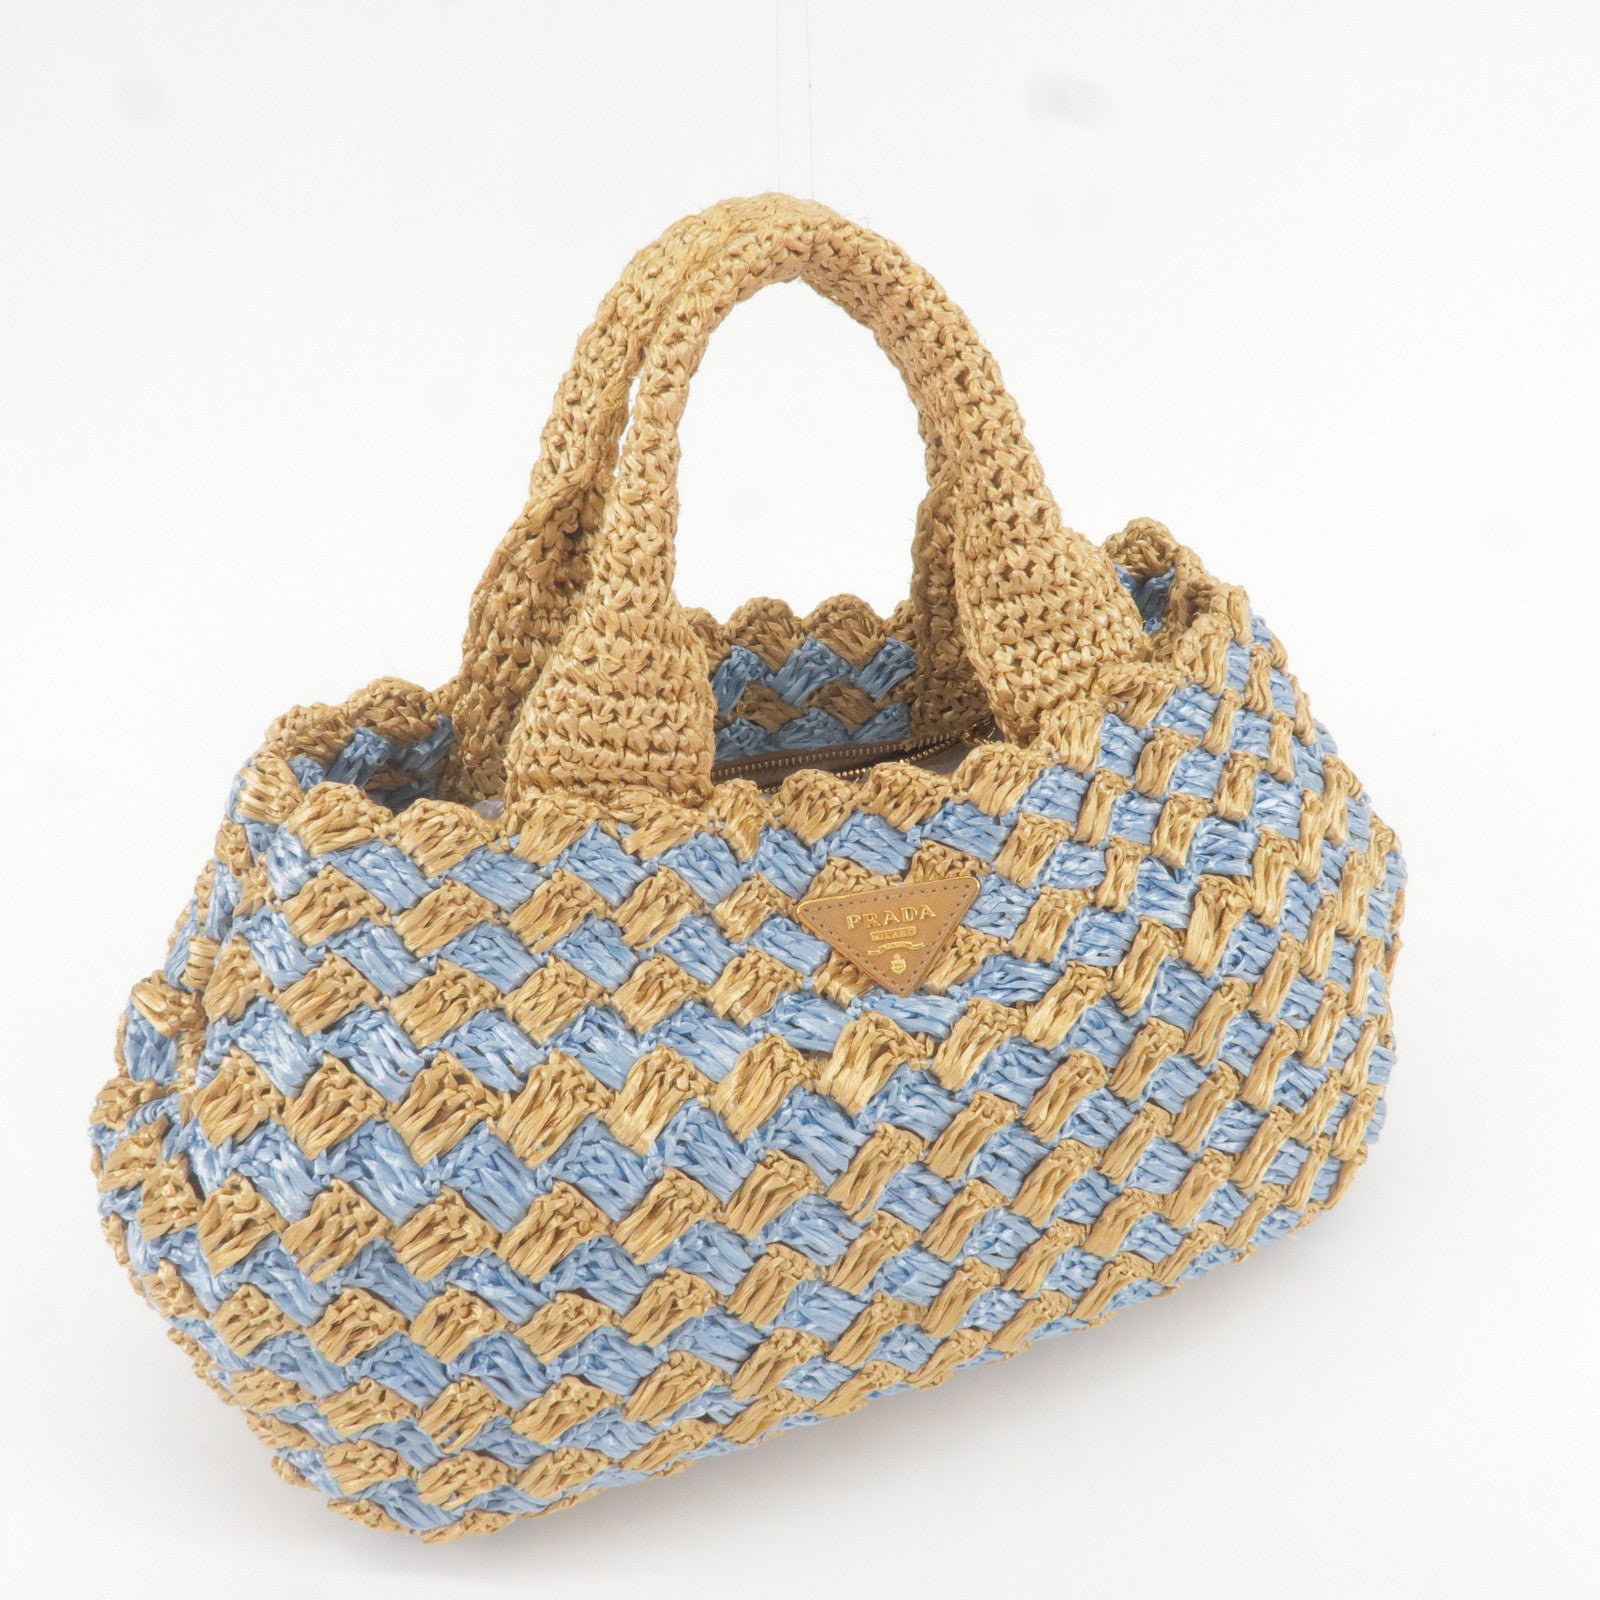 prada crochet shoulder bag